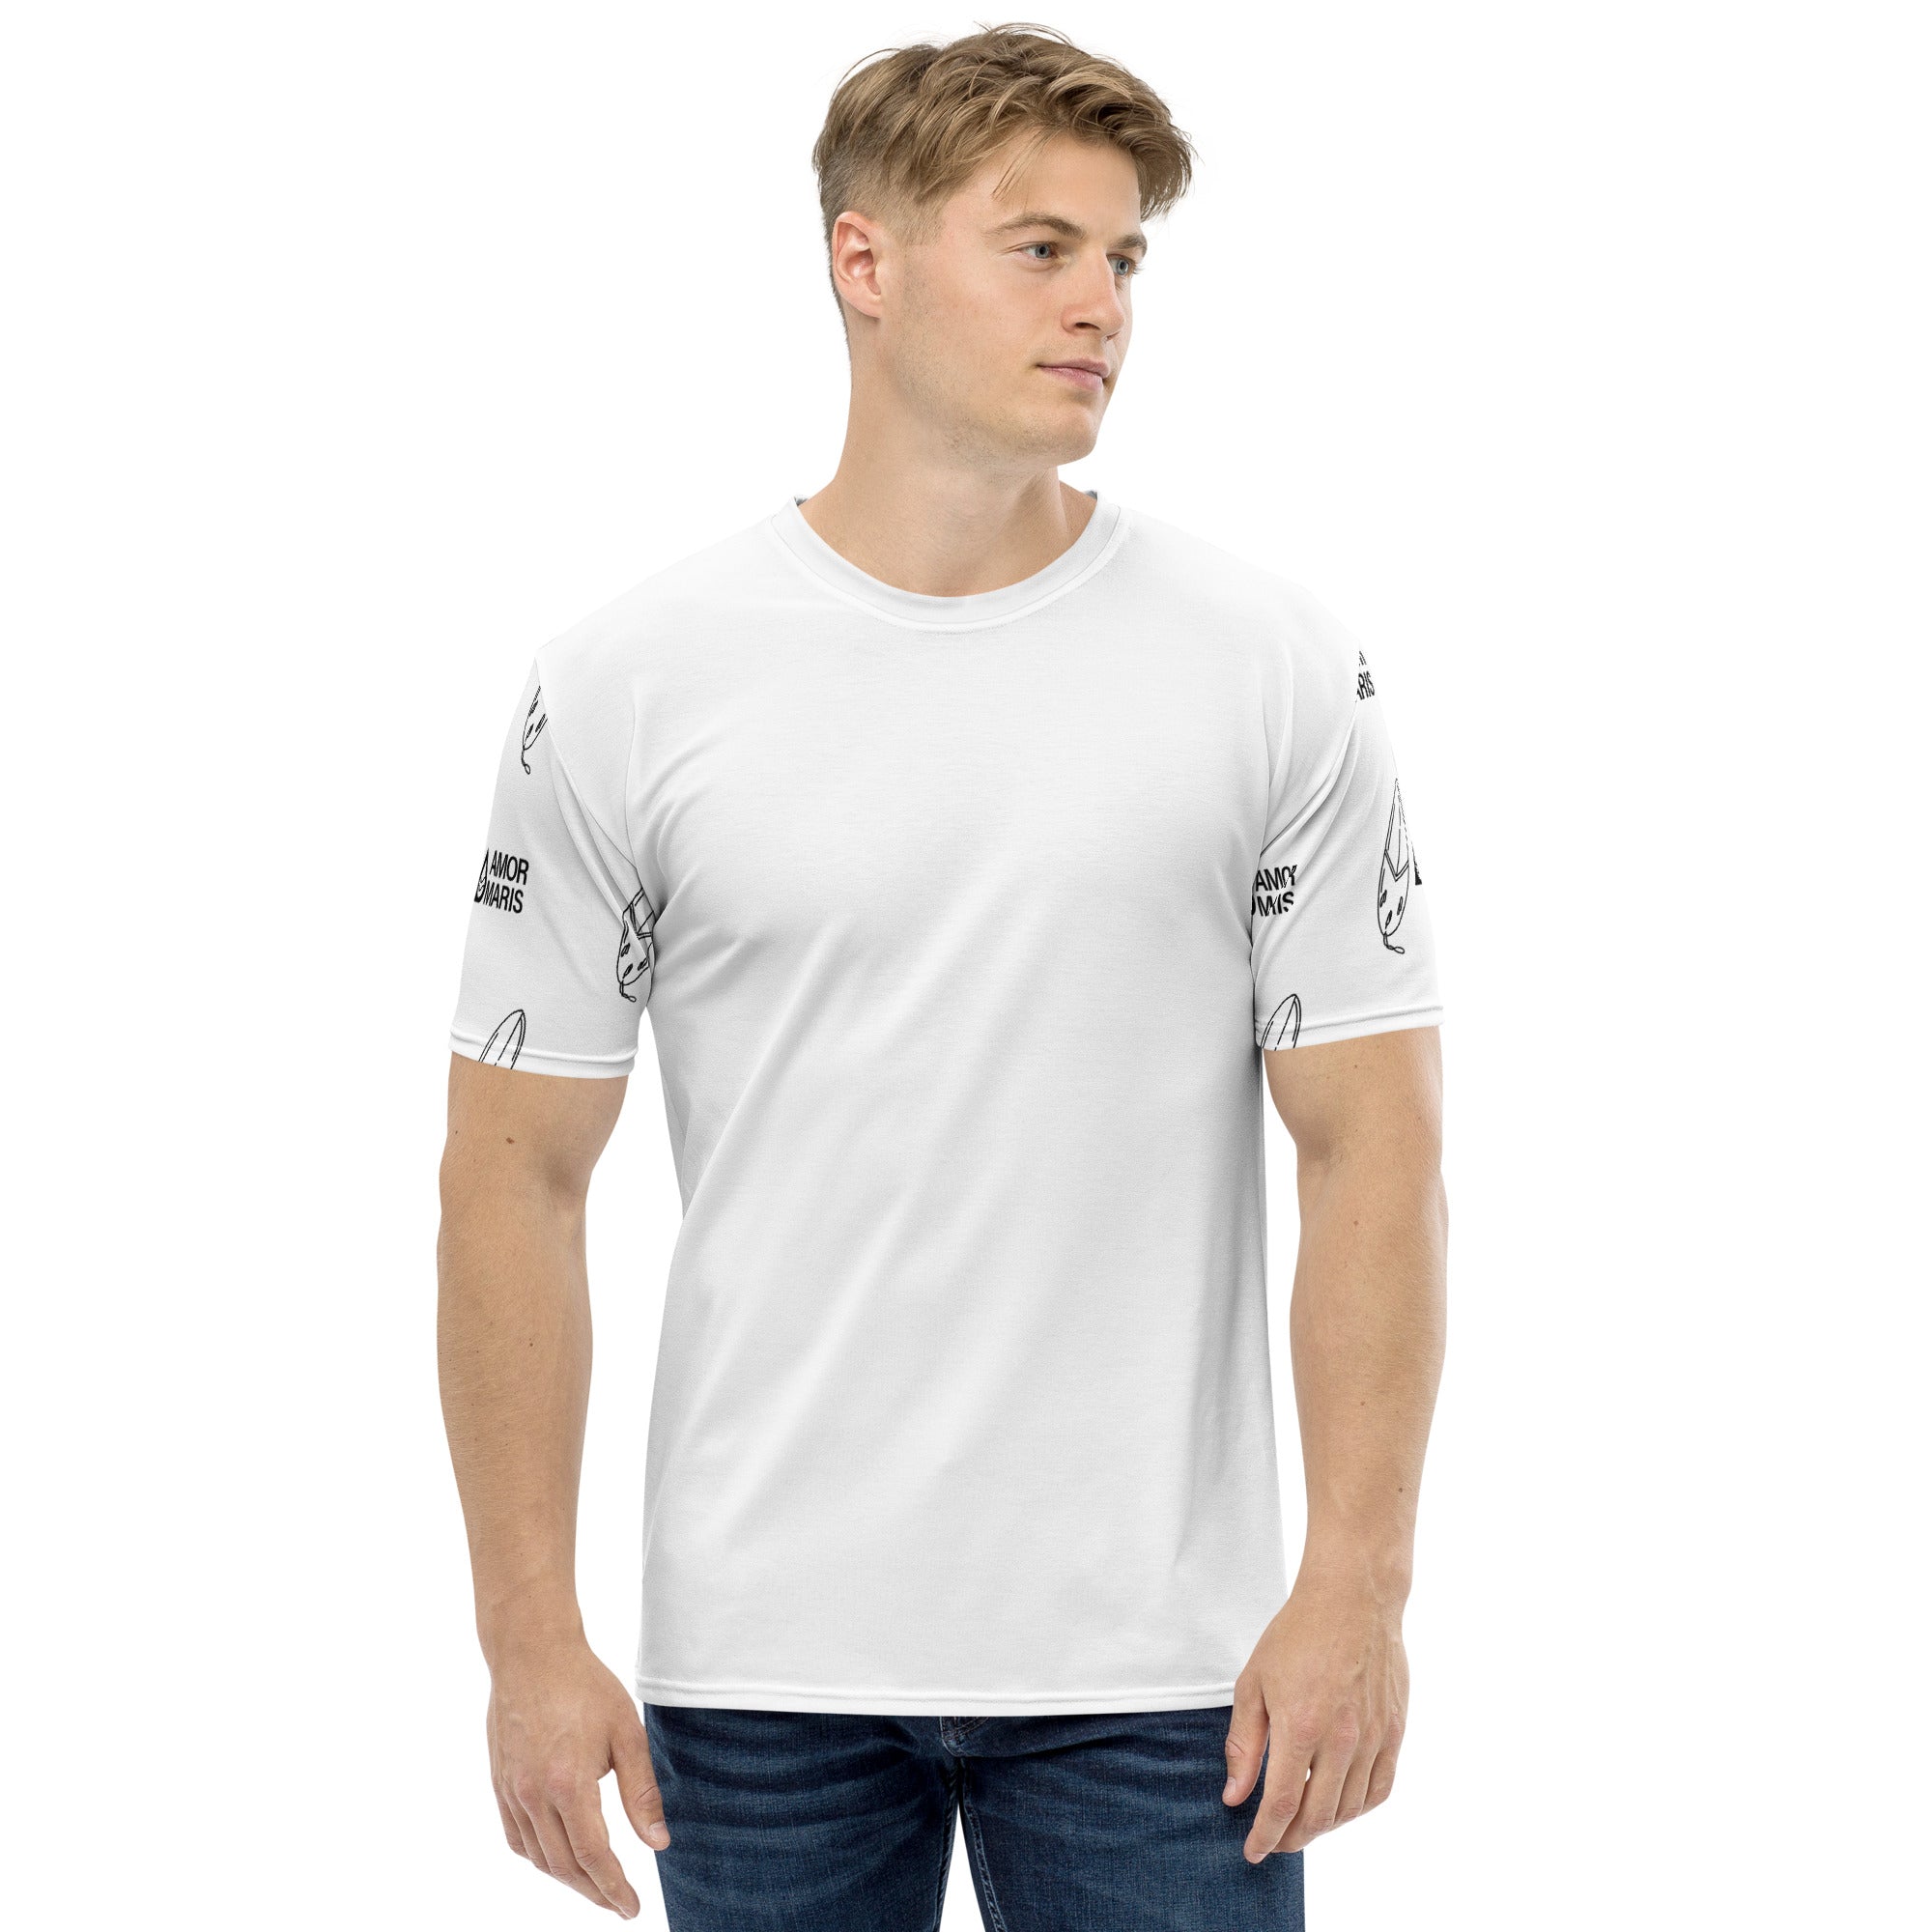 Picky Grinder - Herren-T-Shirt